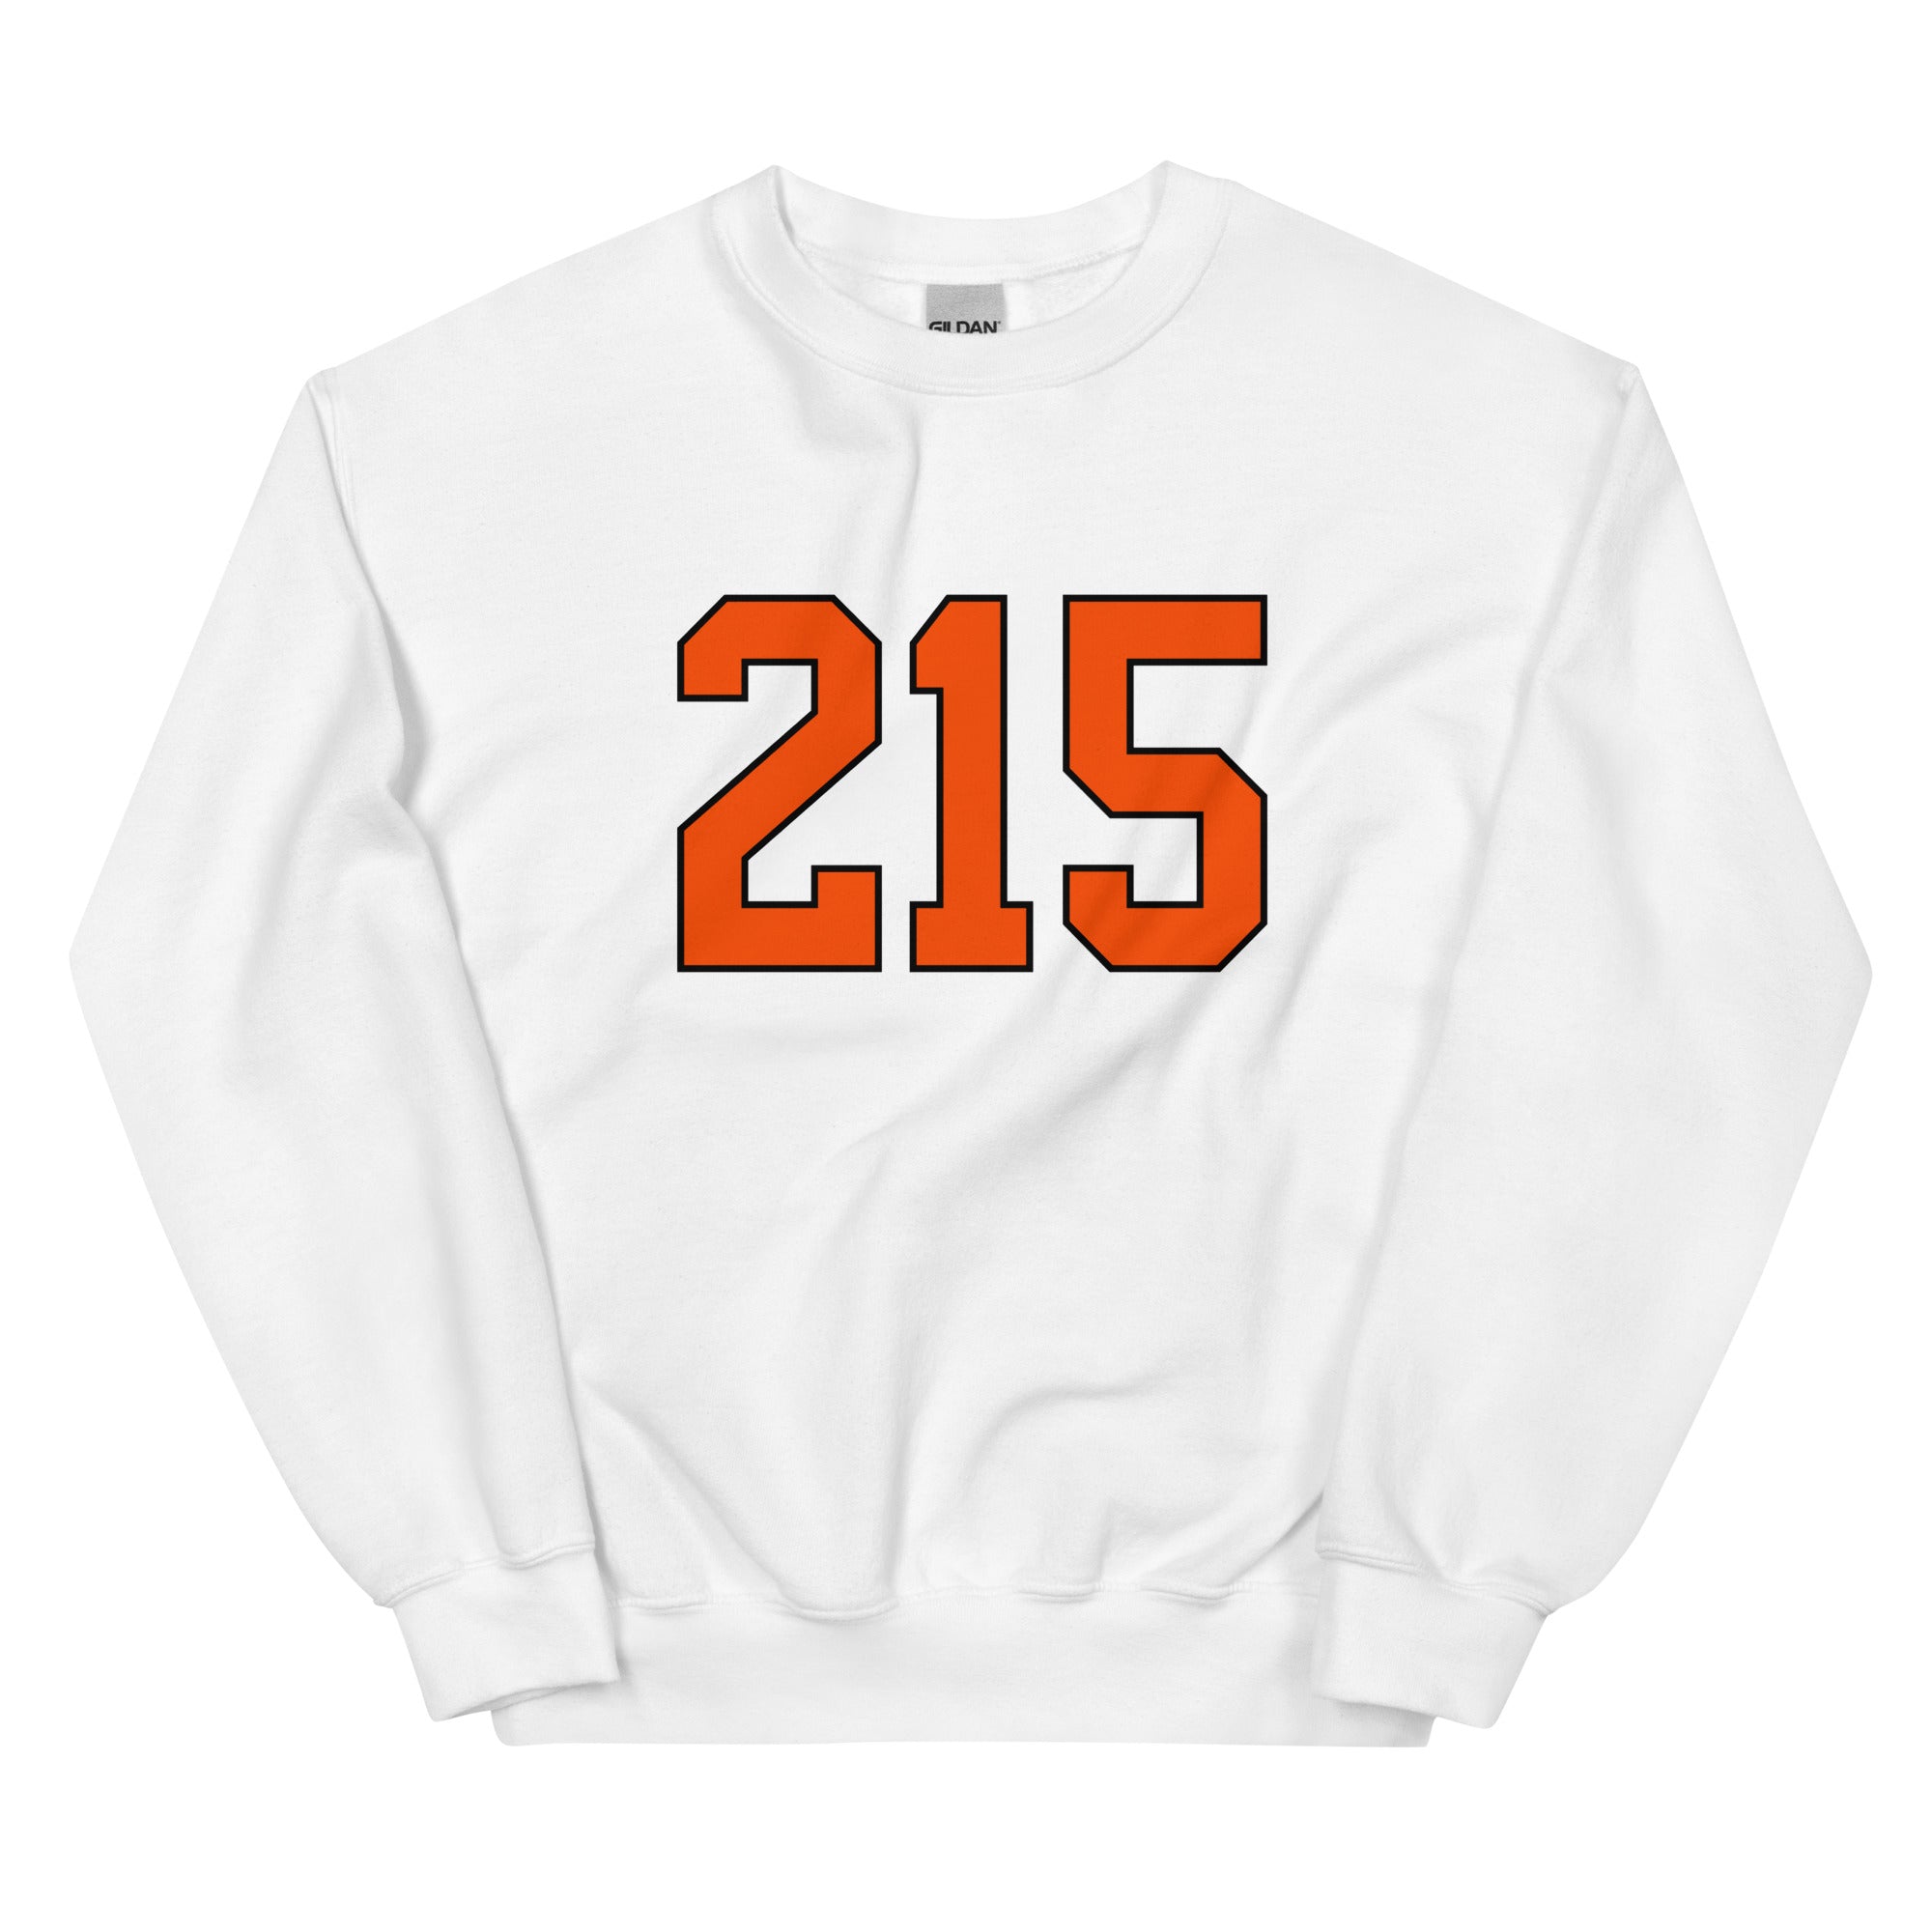 "215 Bully" Sweatshirt